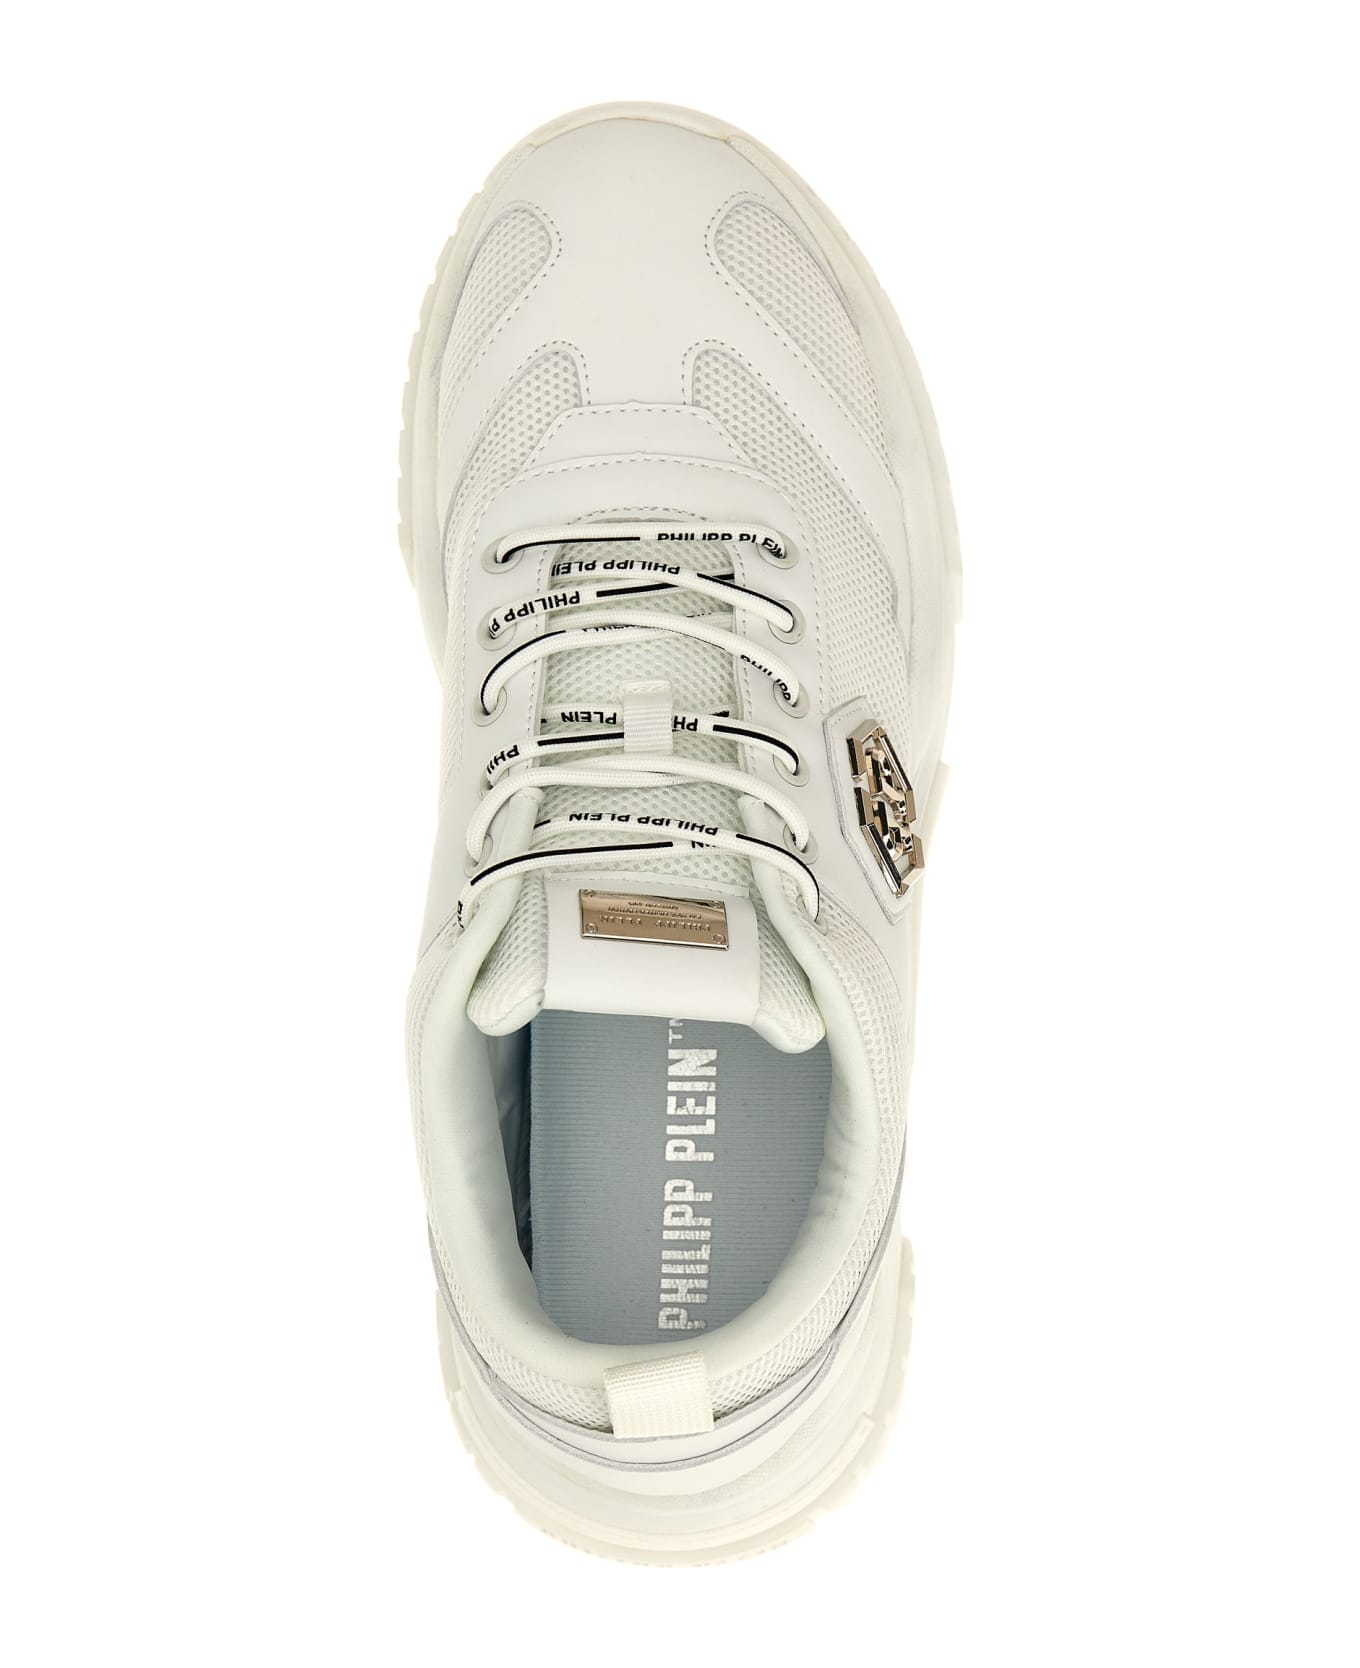 Philipp Plein 'predator' Sneakers - Bianco スニーカー